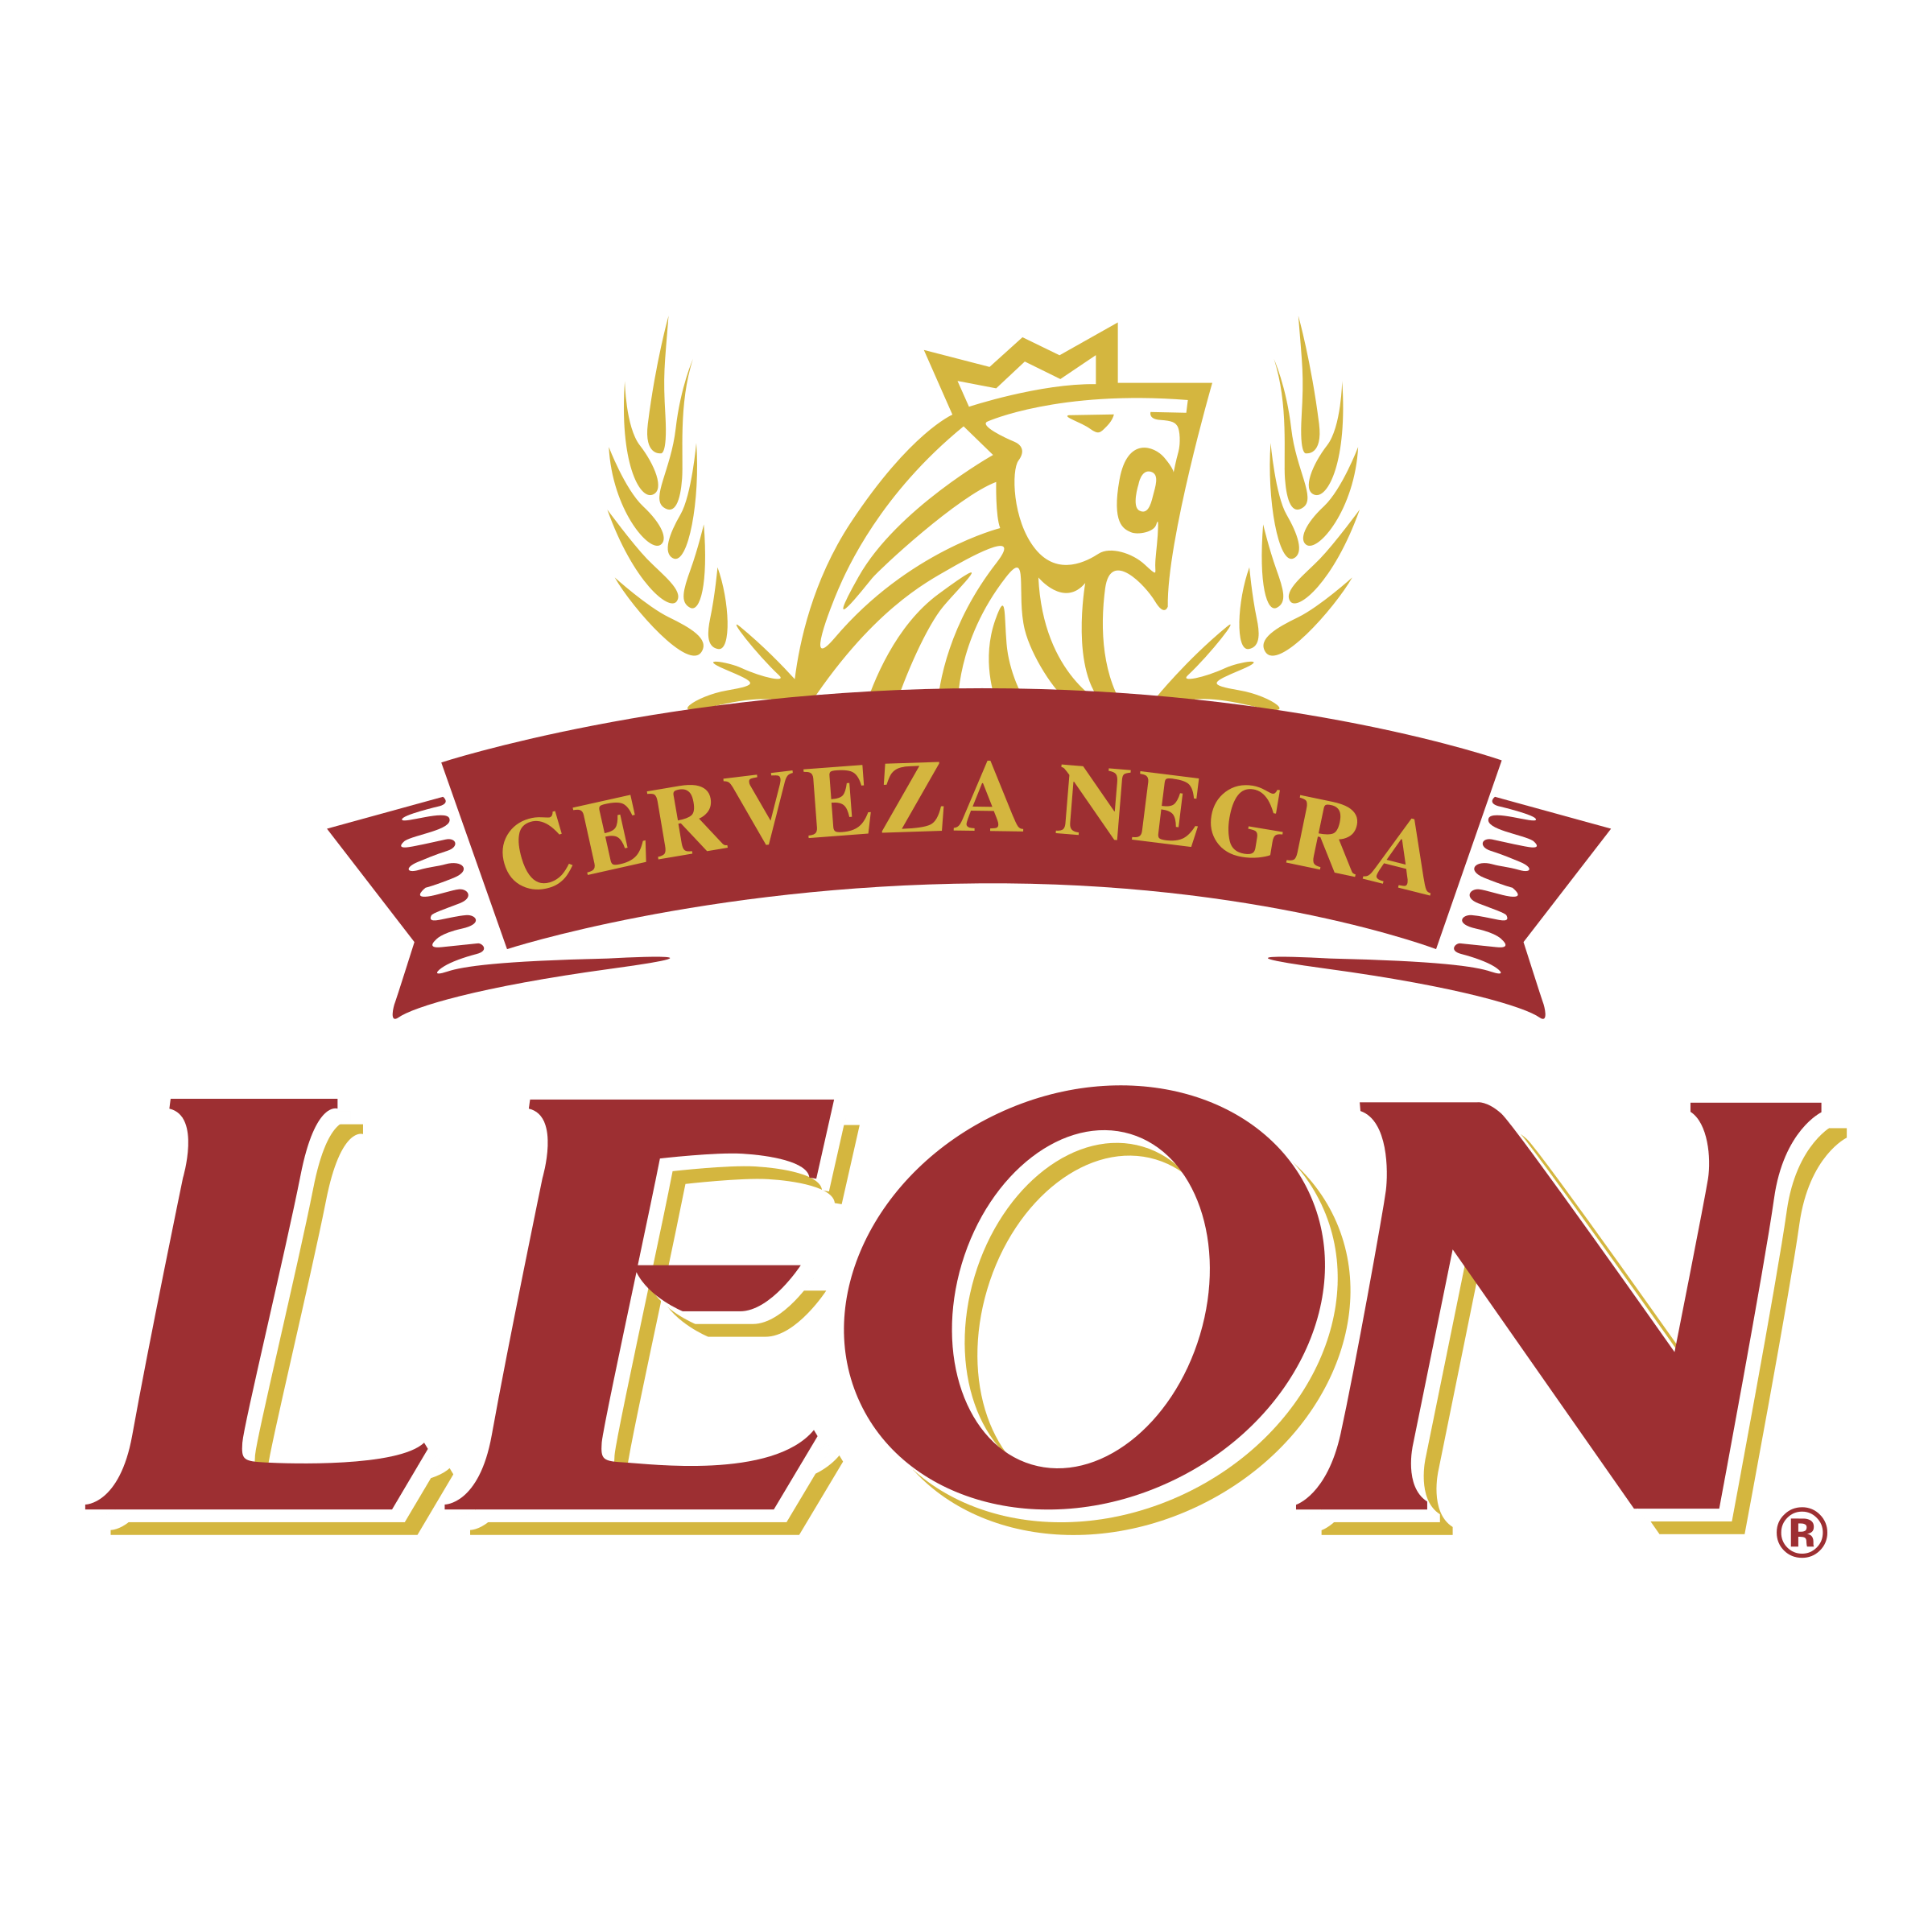 Leon Logo - Leon Logo PNG Transparent & SVG Vector - Freebie Supply